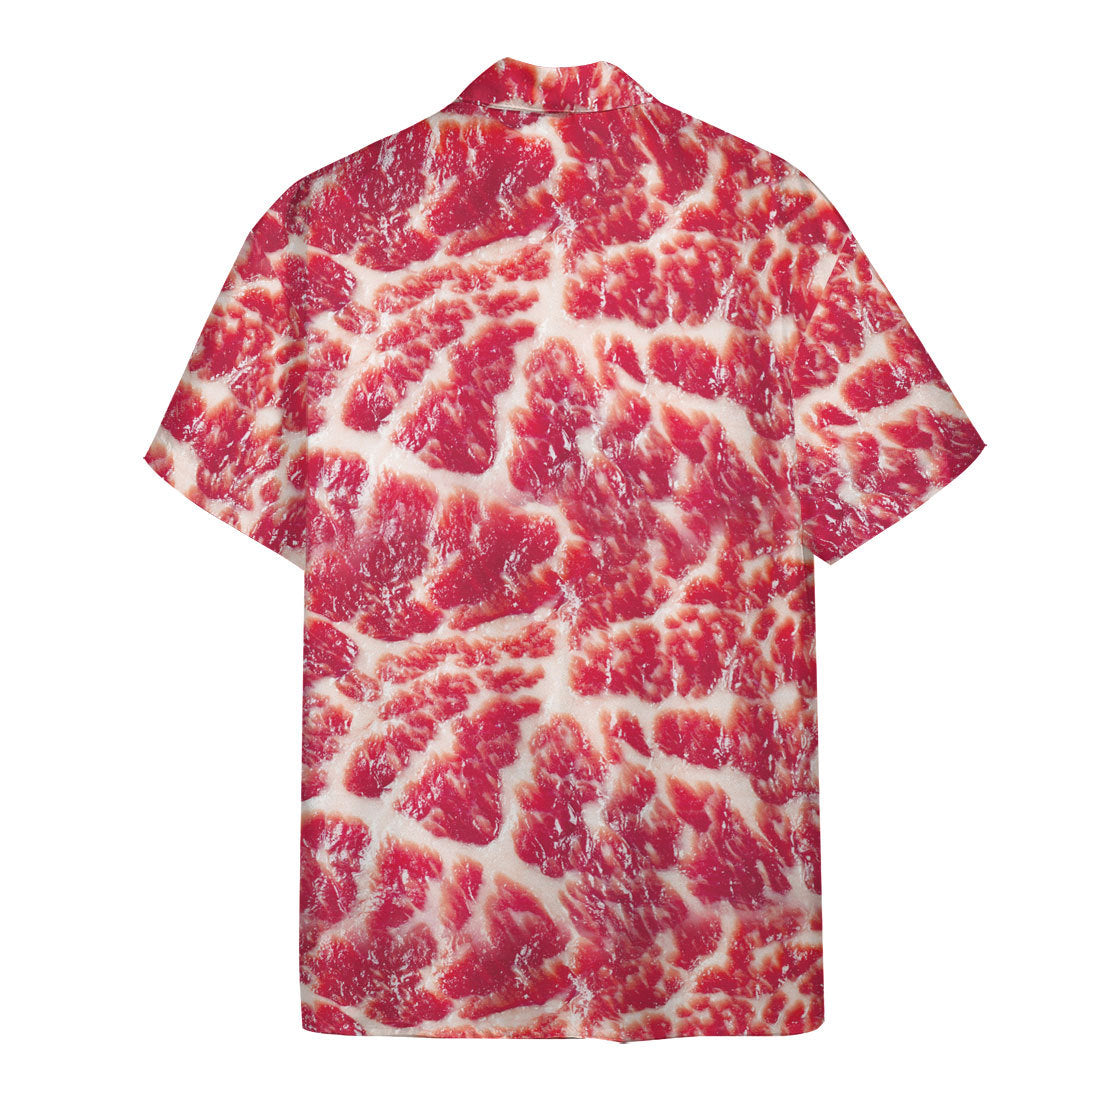 Raw Meat Hawaii Shirt